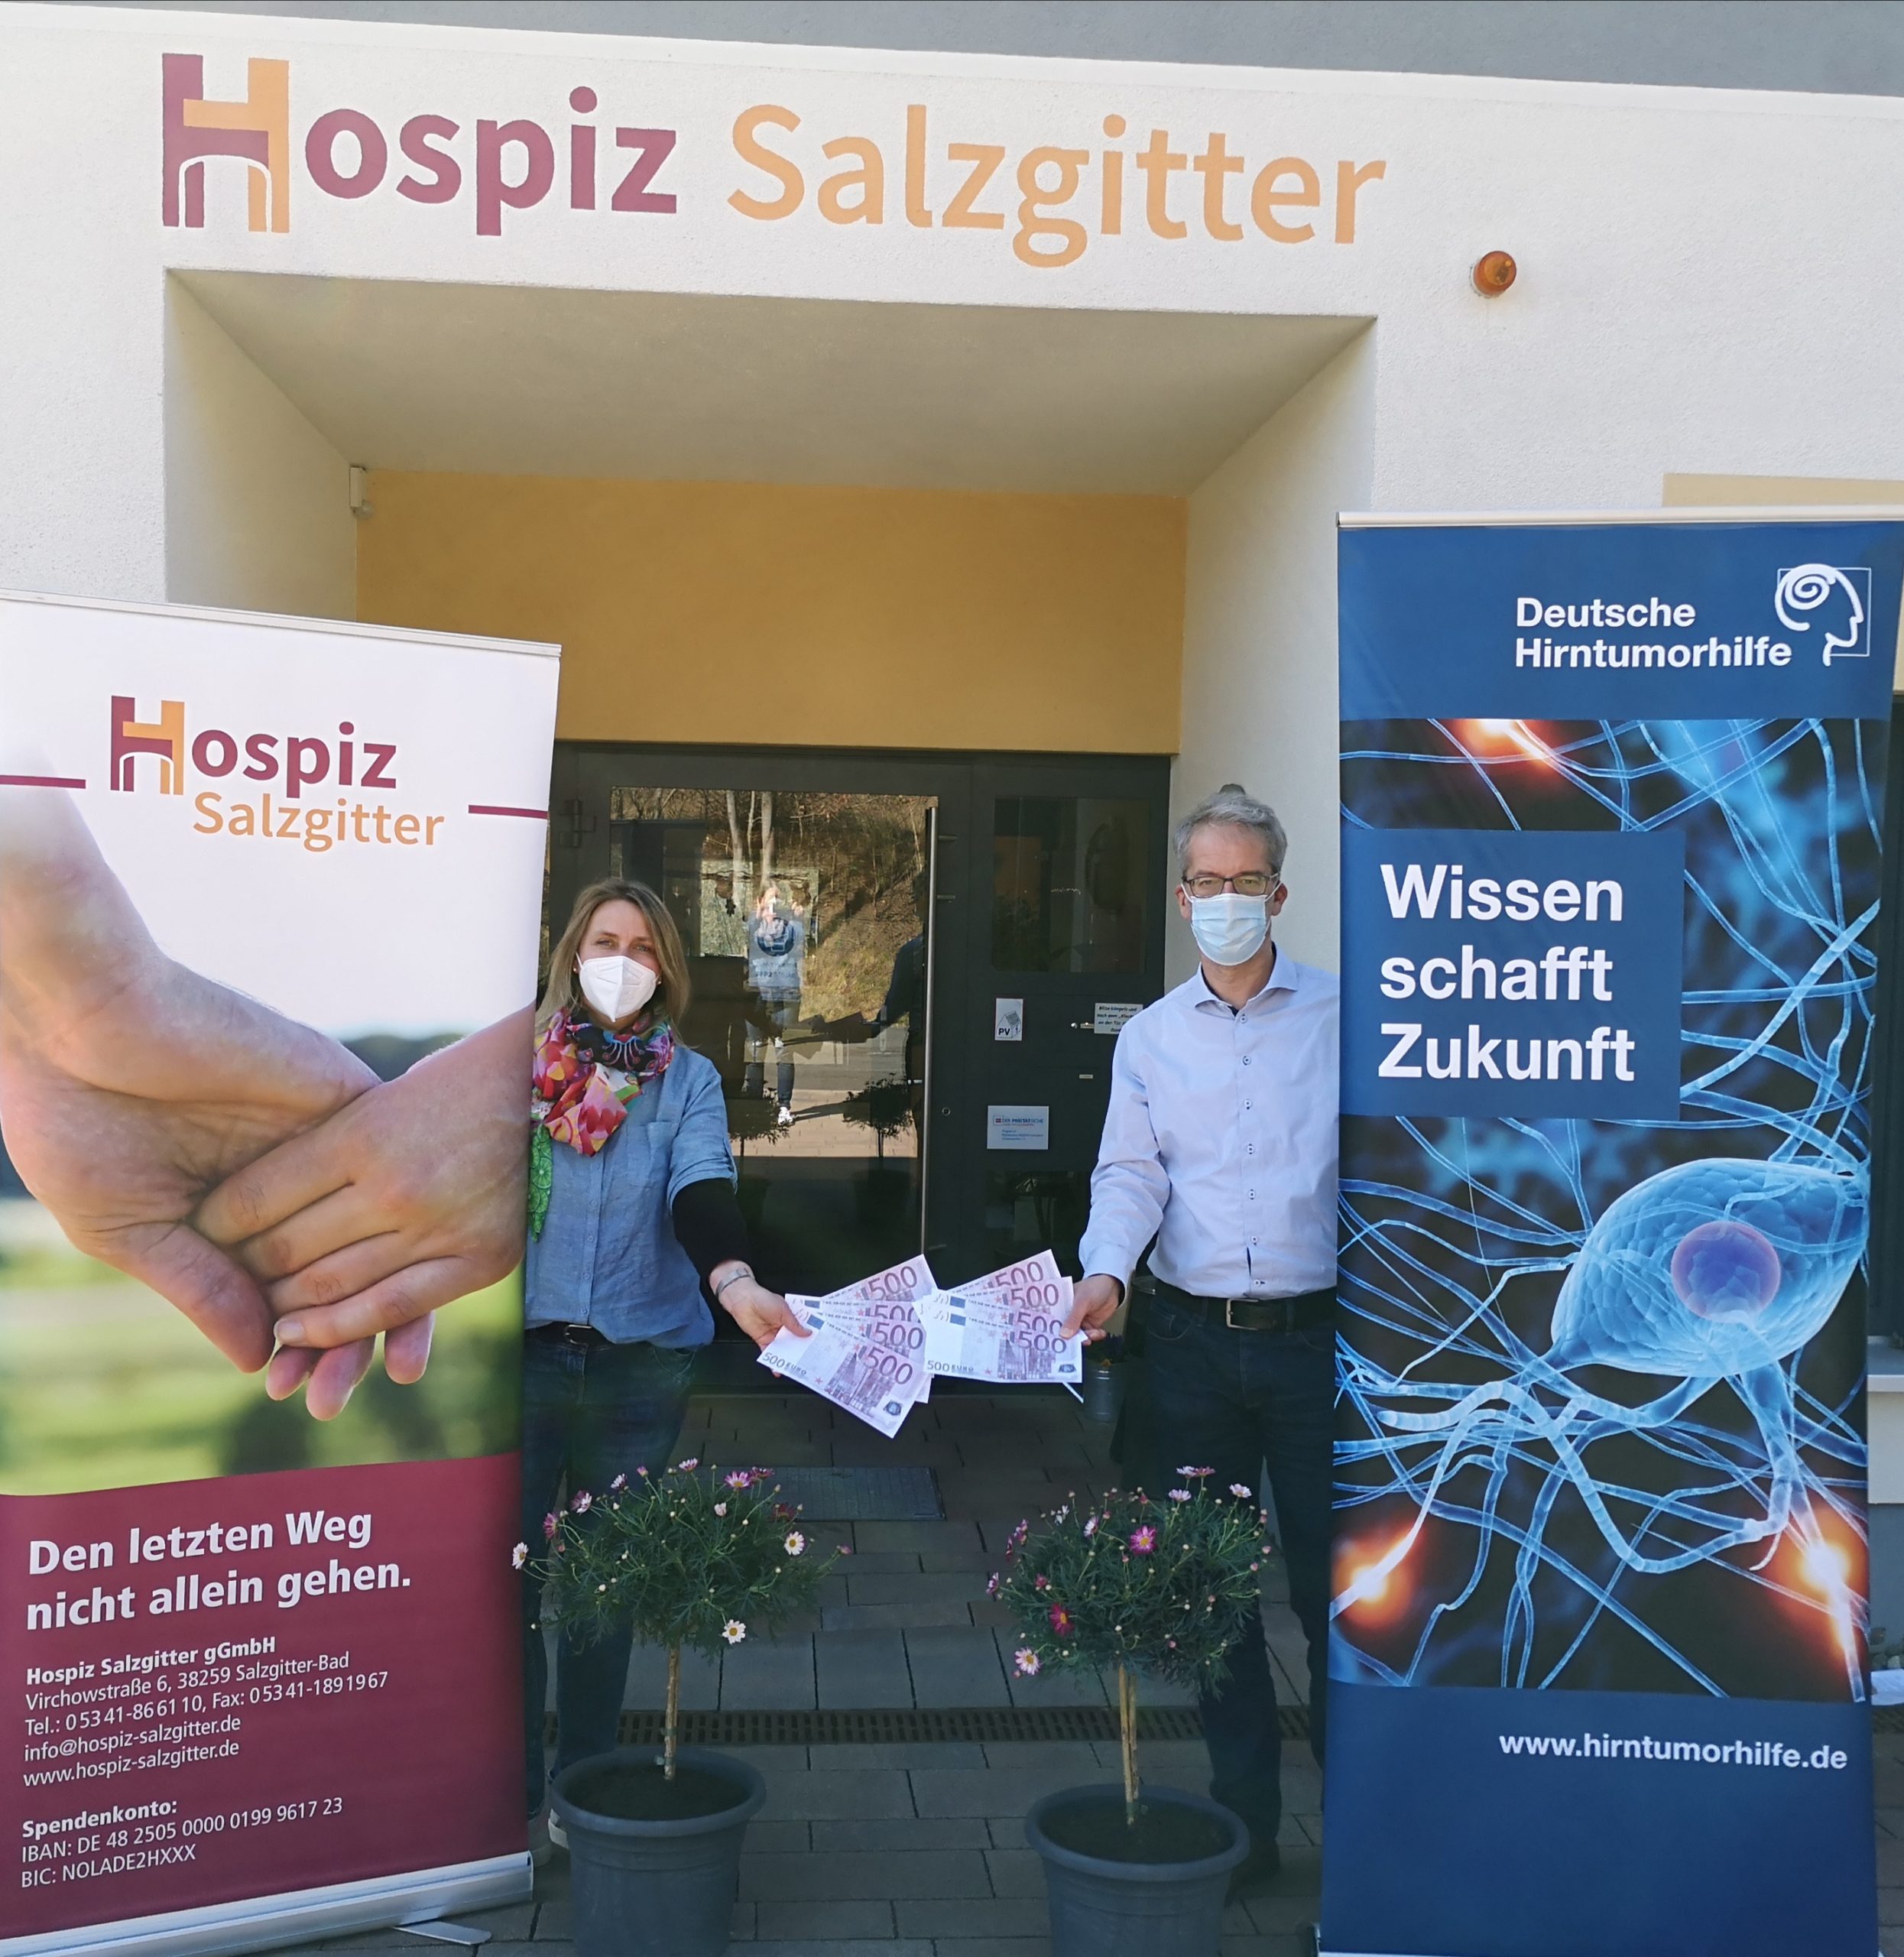 Hospiz Salzgitter - "Petra und Matthias Hirte Stiftung"